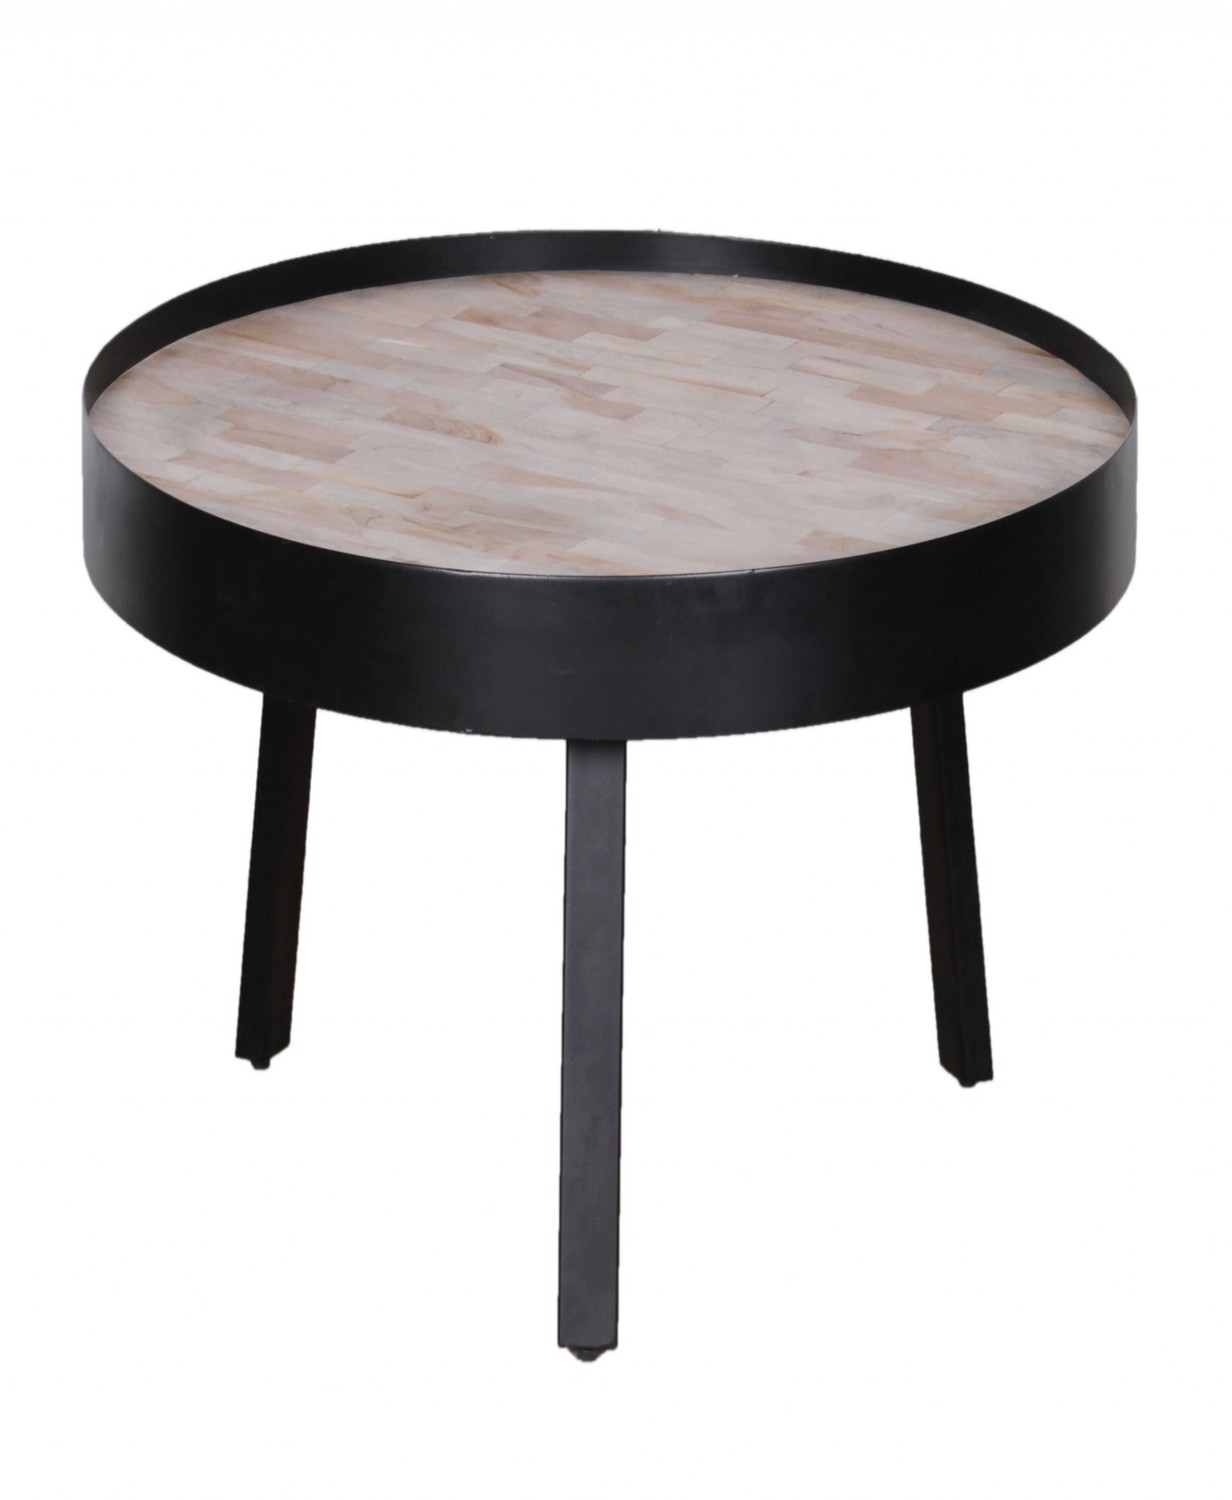 21" X 21" X 19" Multi Wood Metal Round Coffee Table Small